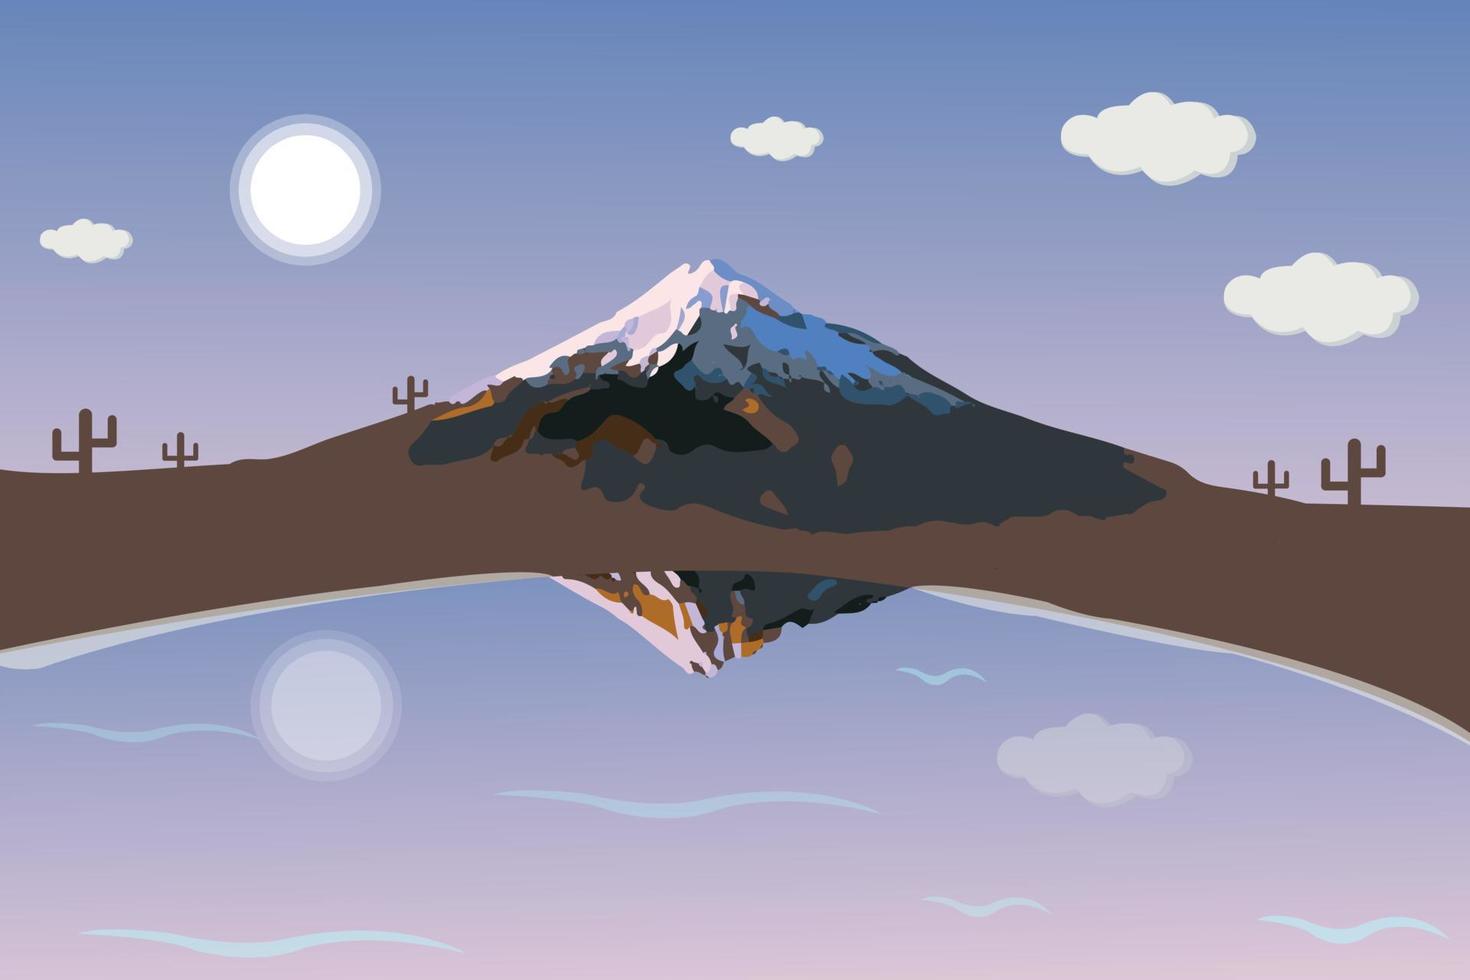 karikaturberglandschaft mit blauem himmel, sonne und wolken, grünes feld. berg reflektieren see oder fluss 2d-cartoon-szenenvektor. Hügel sehen aus wie Pyramiden. vektor